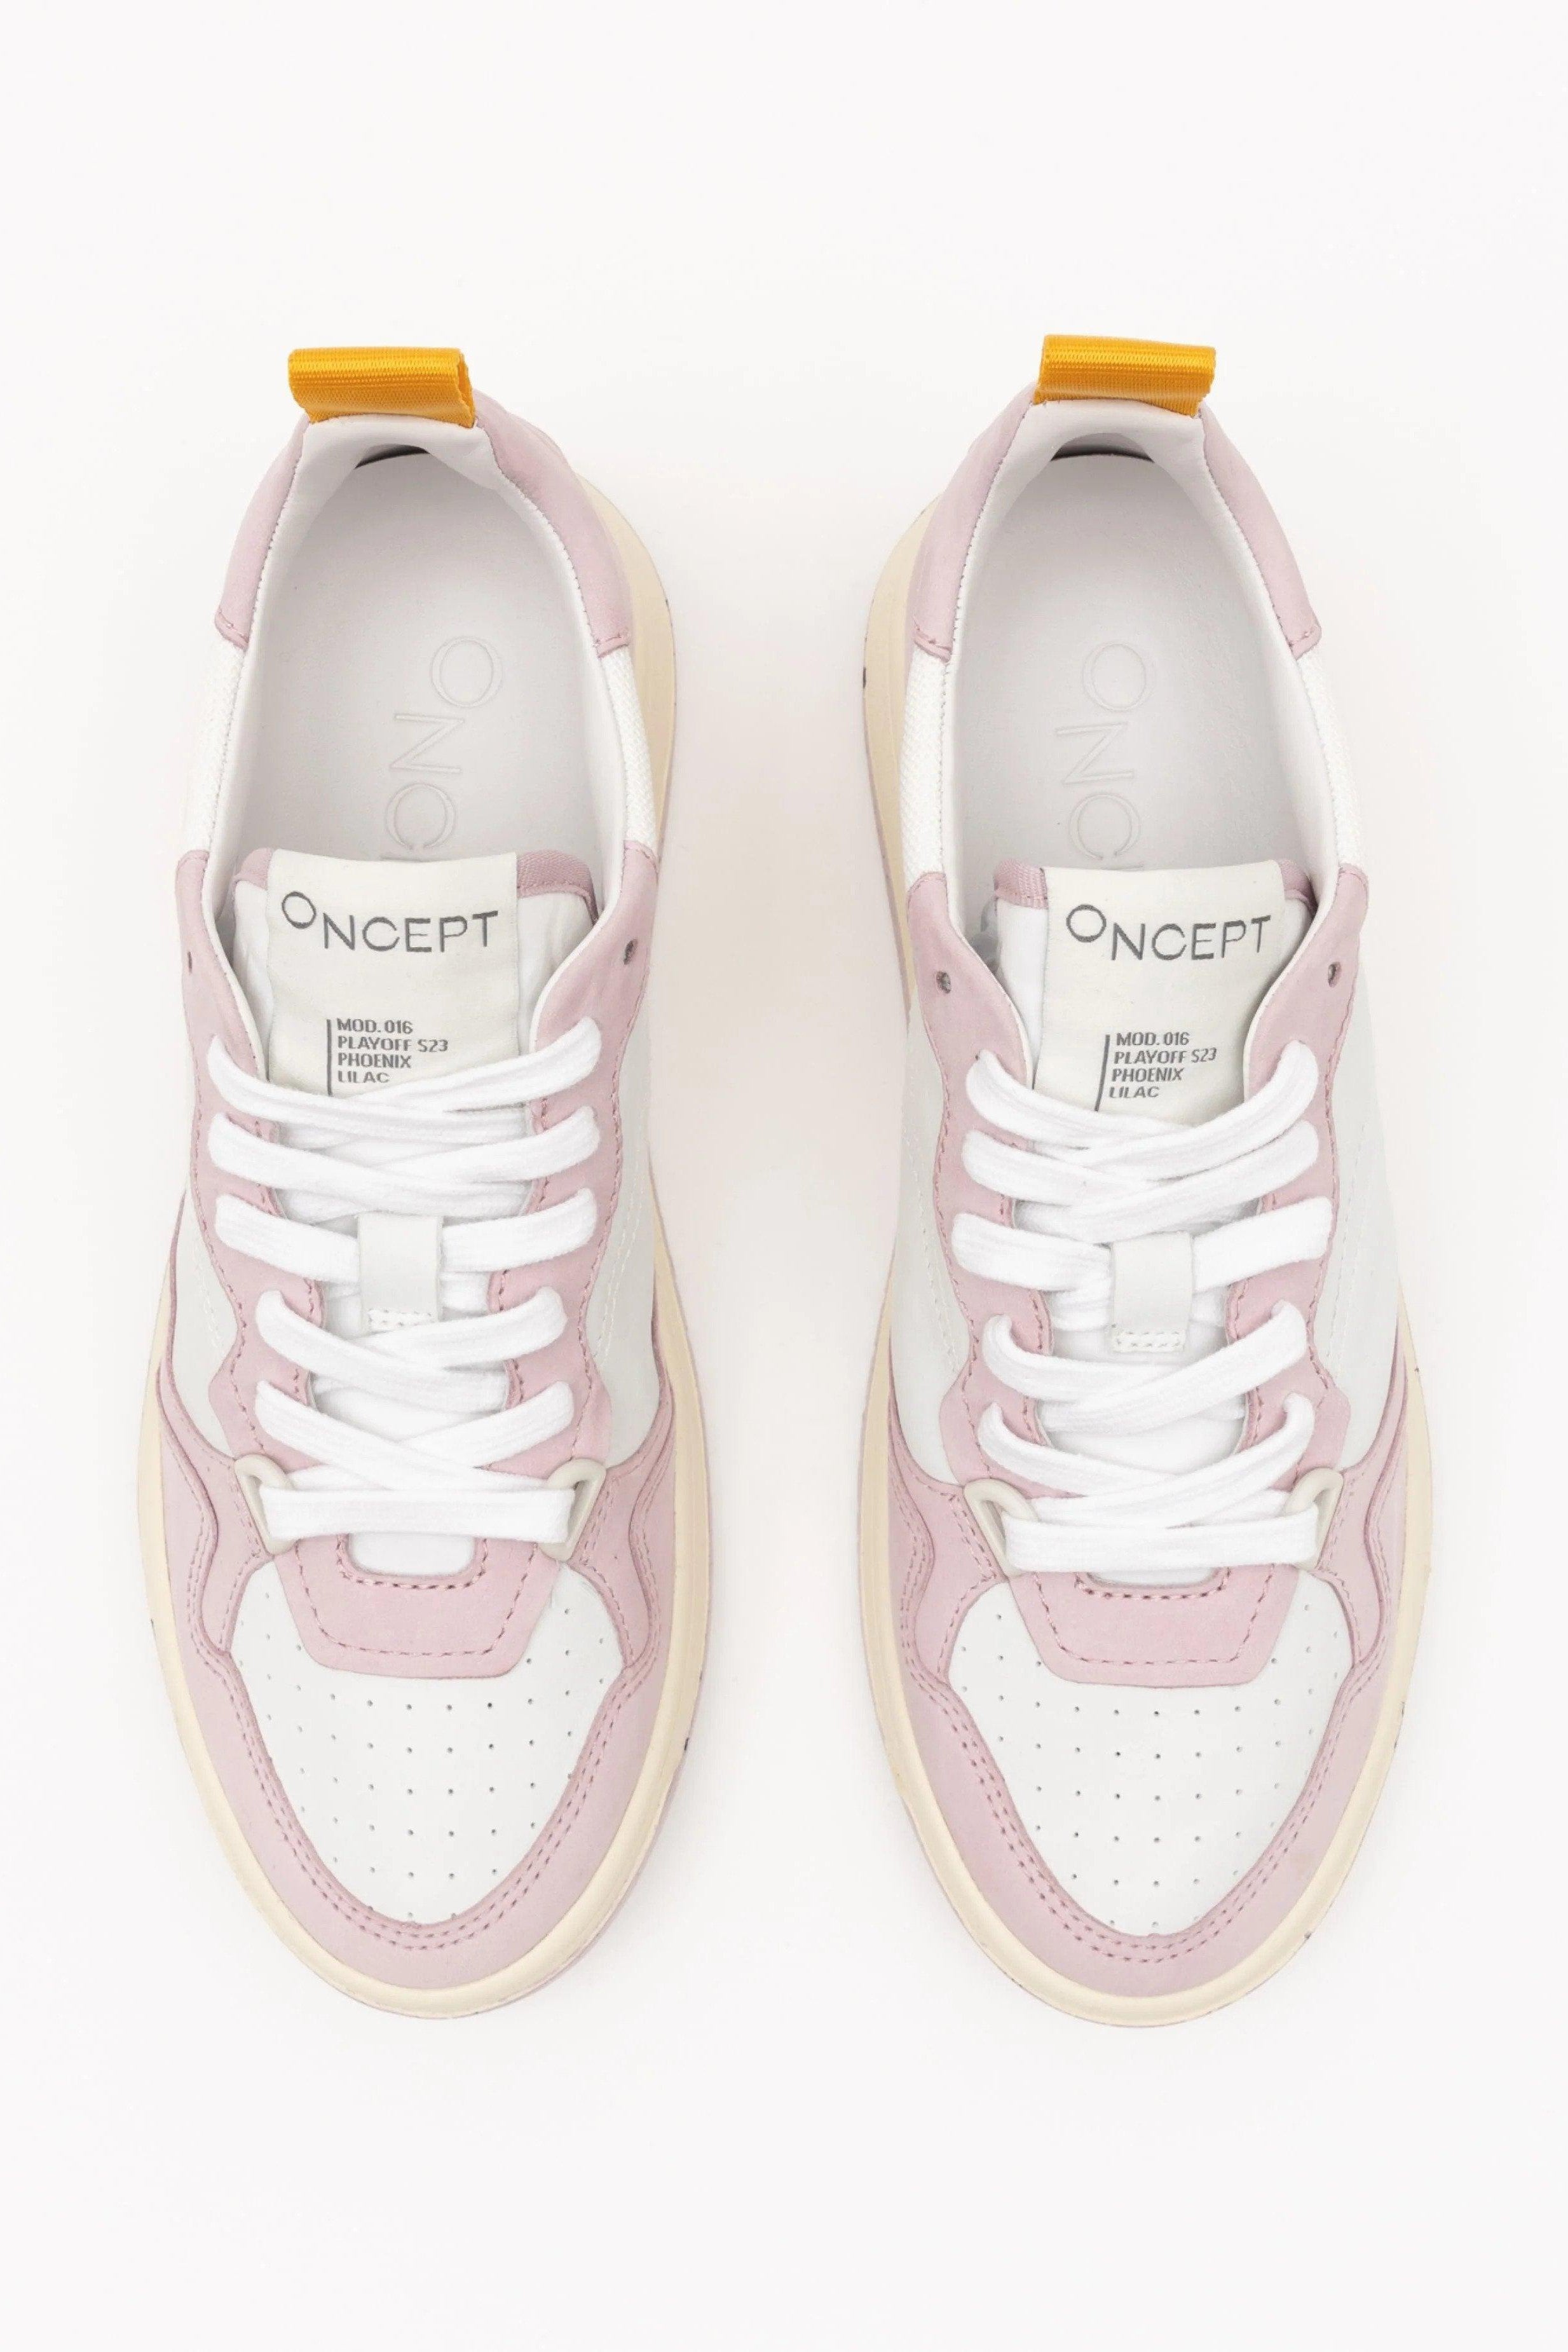 Oncept - Phoenix Sneaker - Lilac